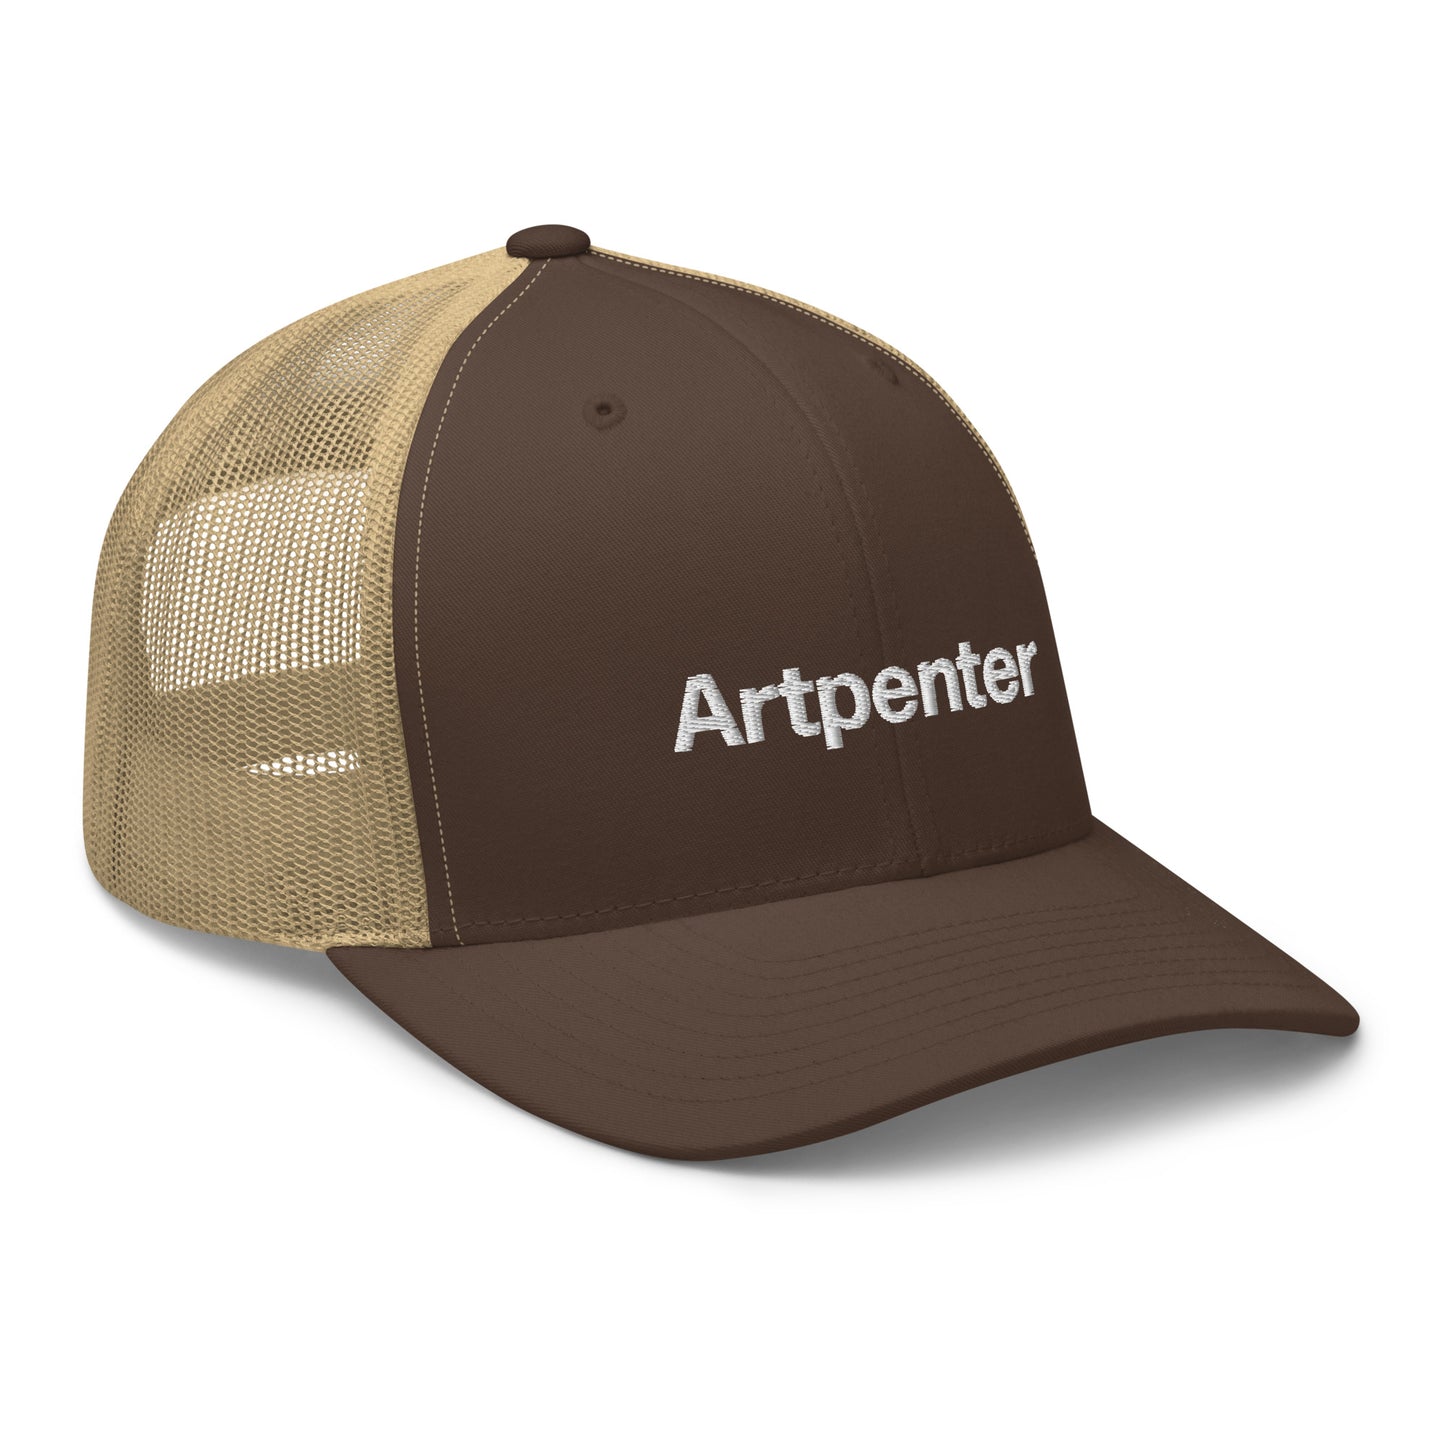 artpenter - trucker hat